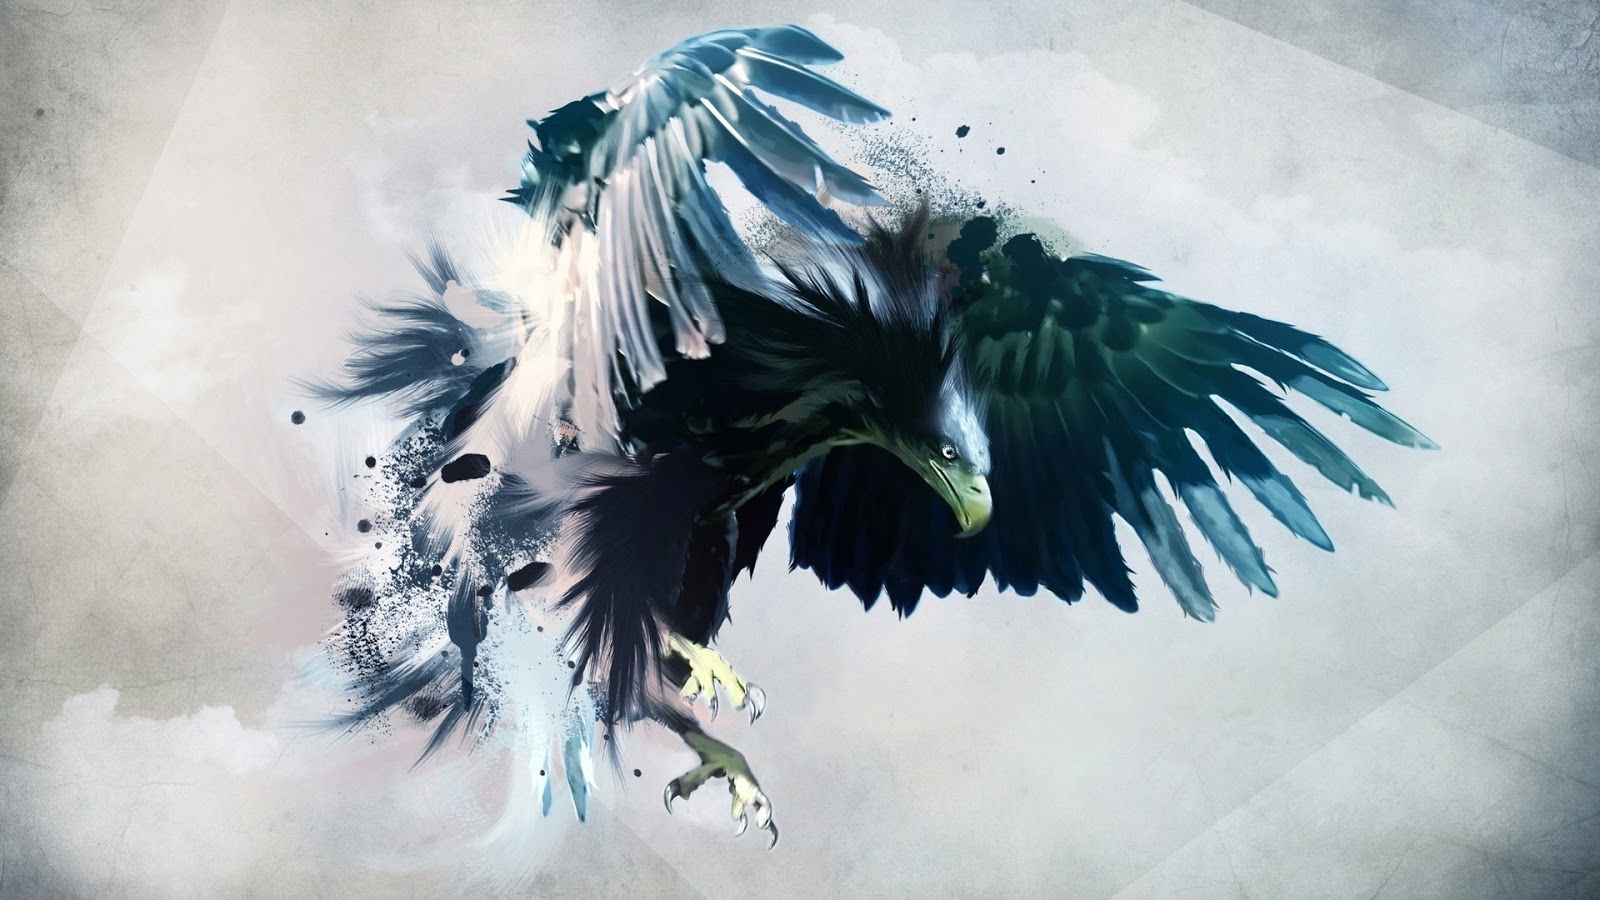 Bird Of Prey Full HD Desktop Wallpaper 1080p